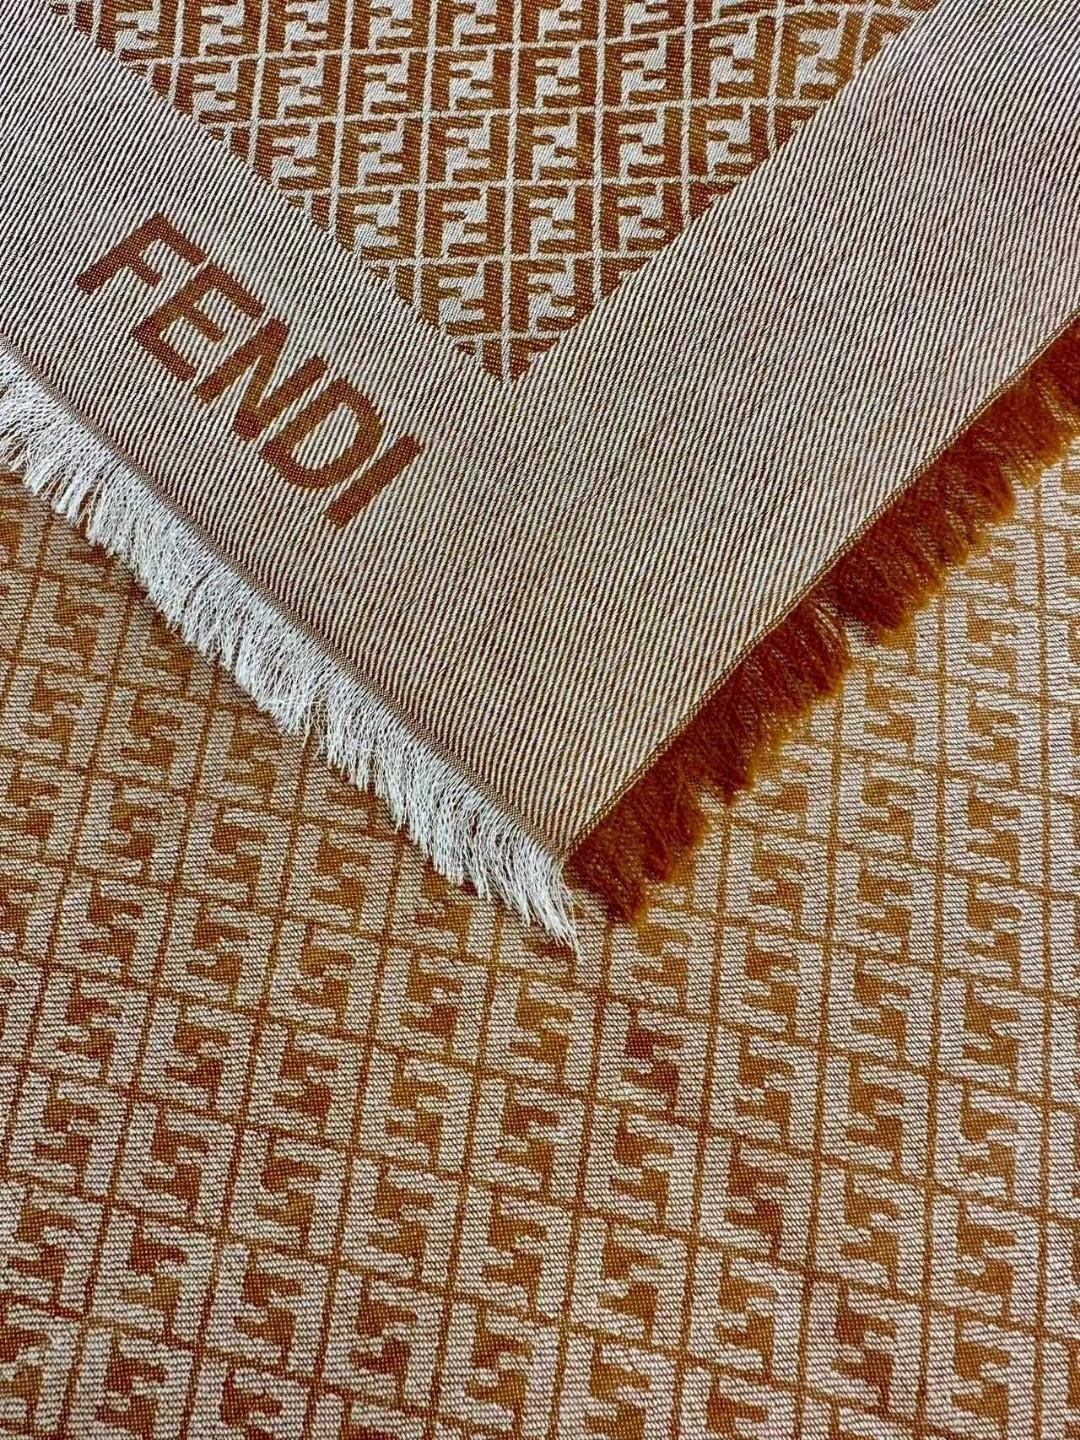 FENDI 桑蚕丝+羔羊毛混纺材质 新款方巾